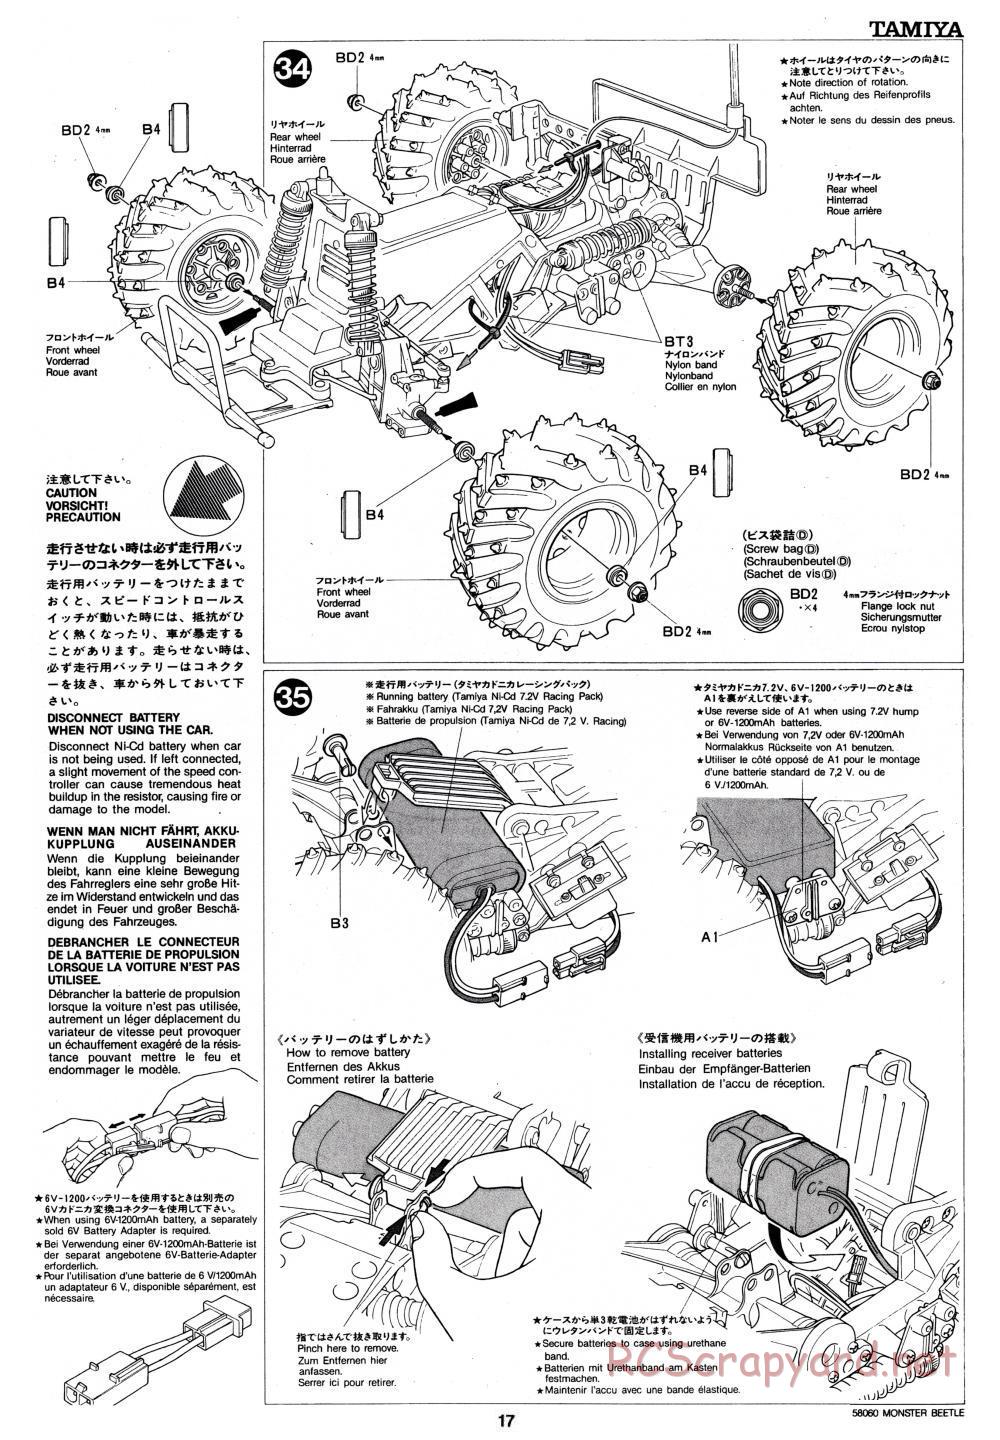 Tamiya - Monster Beetle - 58060 - Manual - Page 17